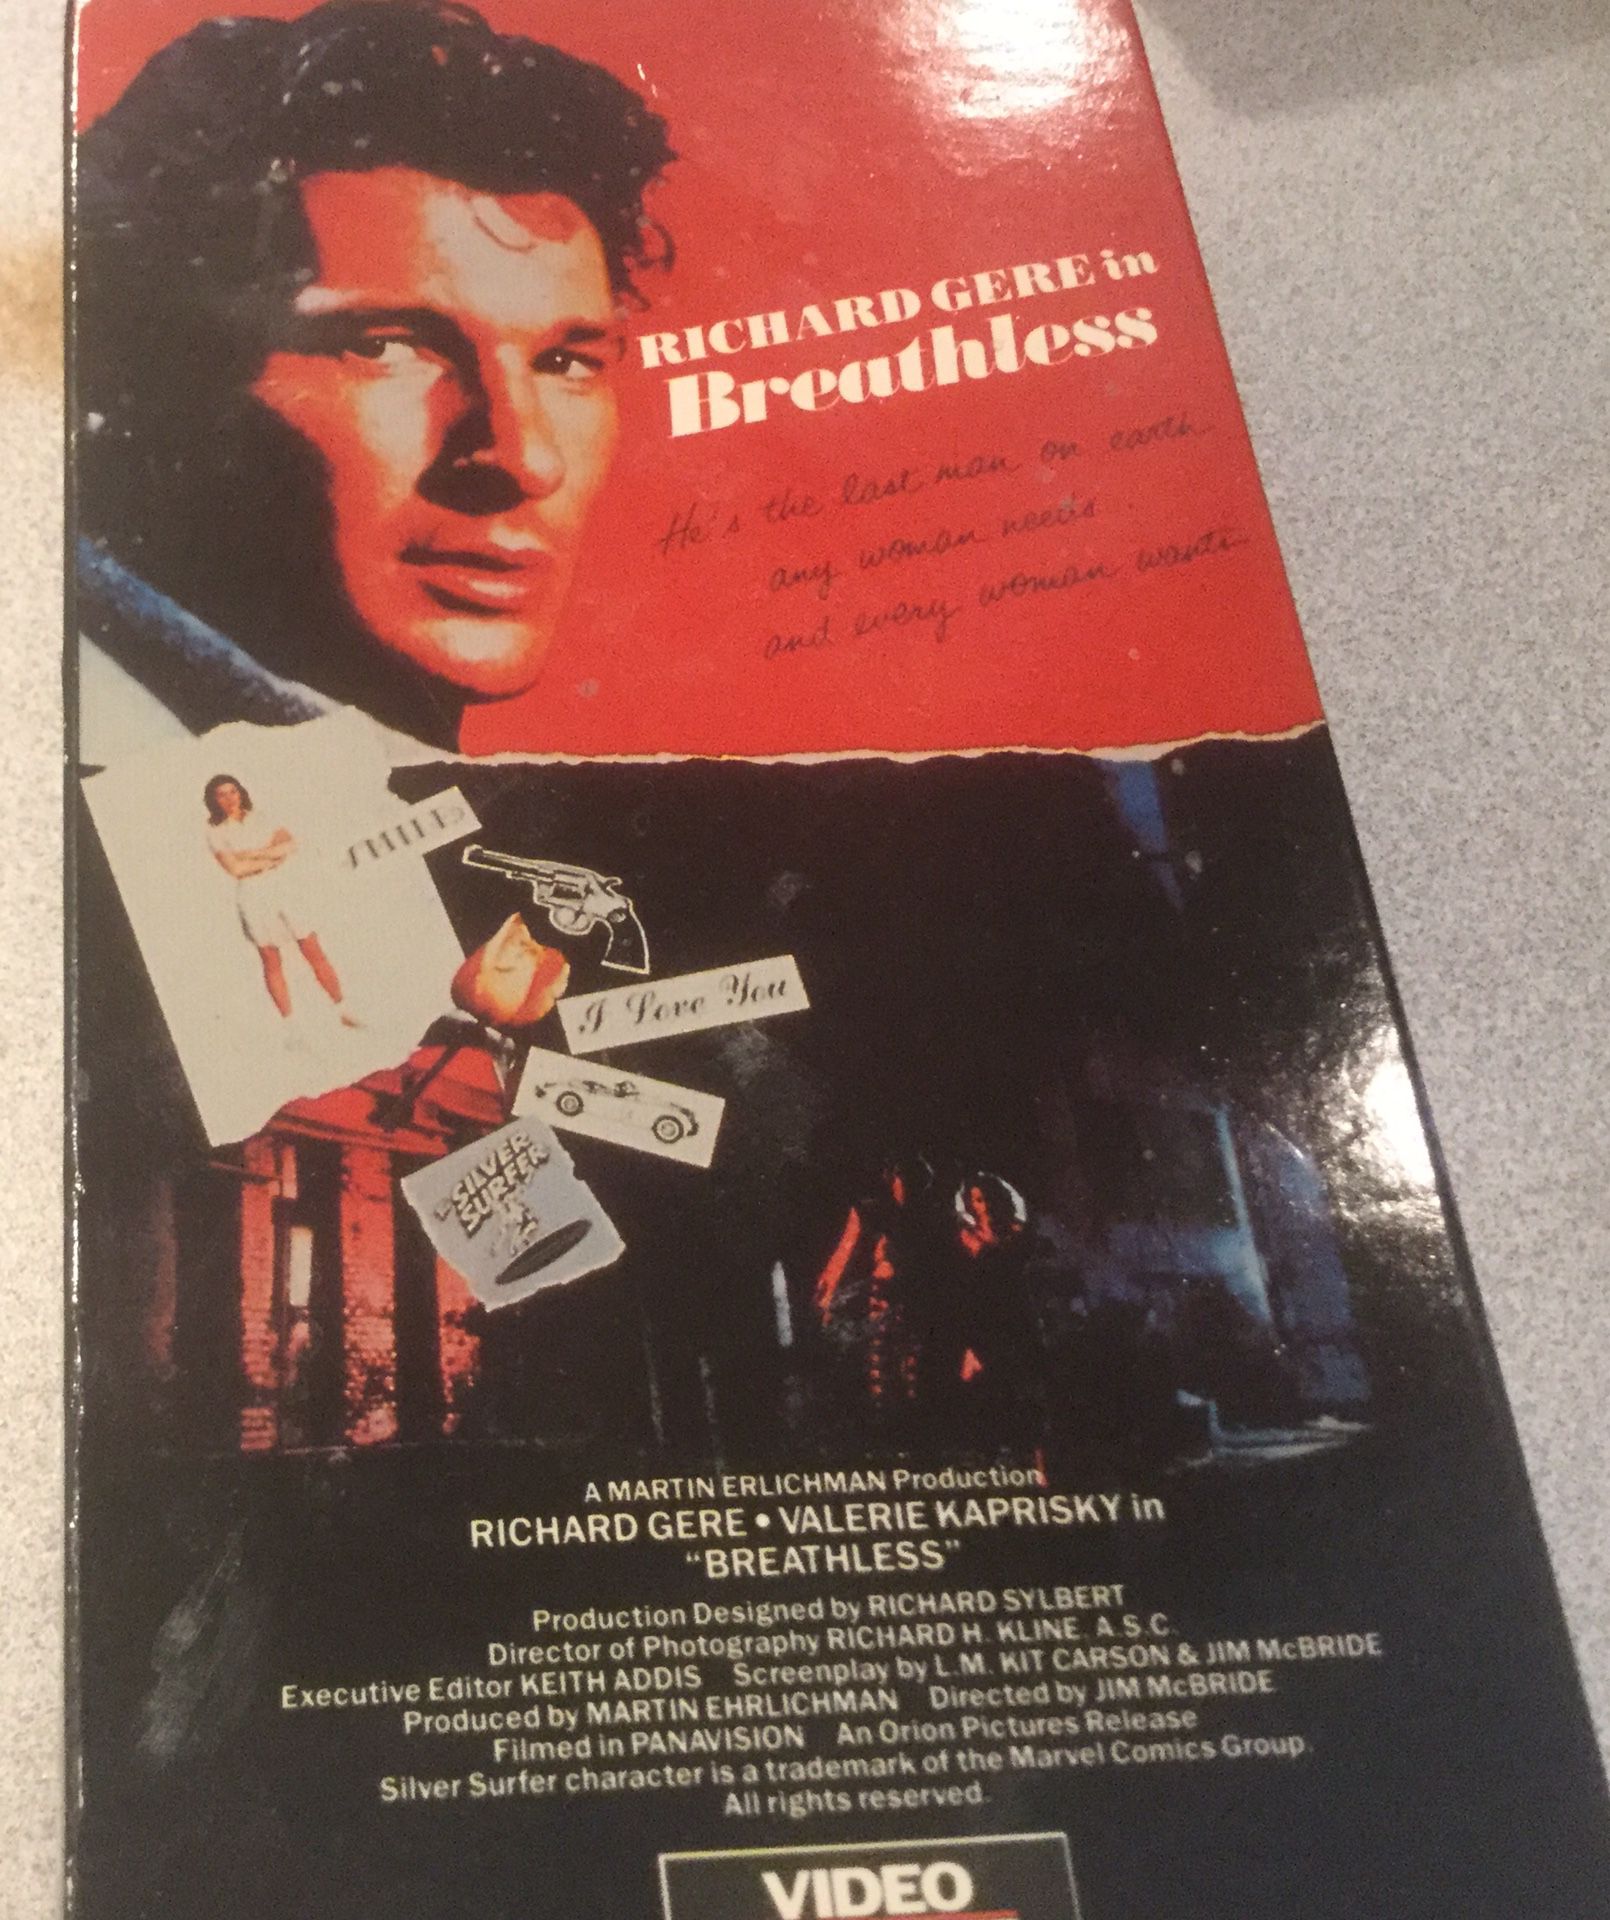 Richard Gere In Breathless VHS TAPE